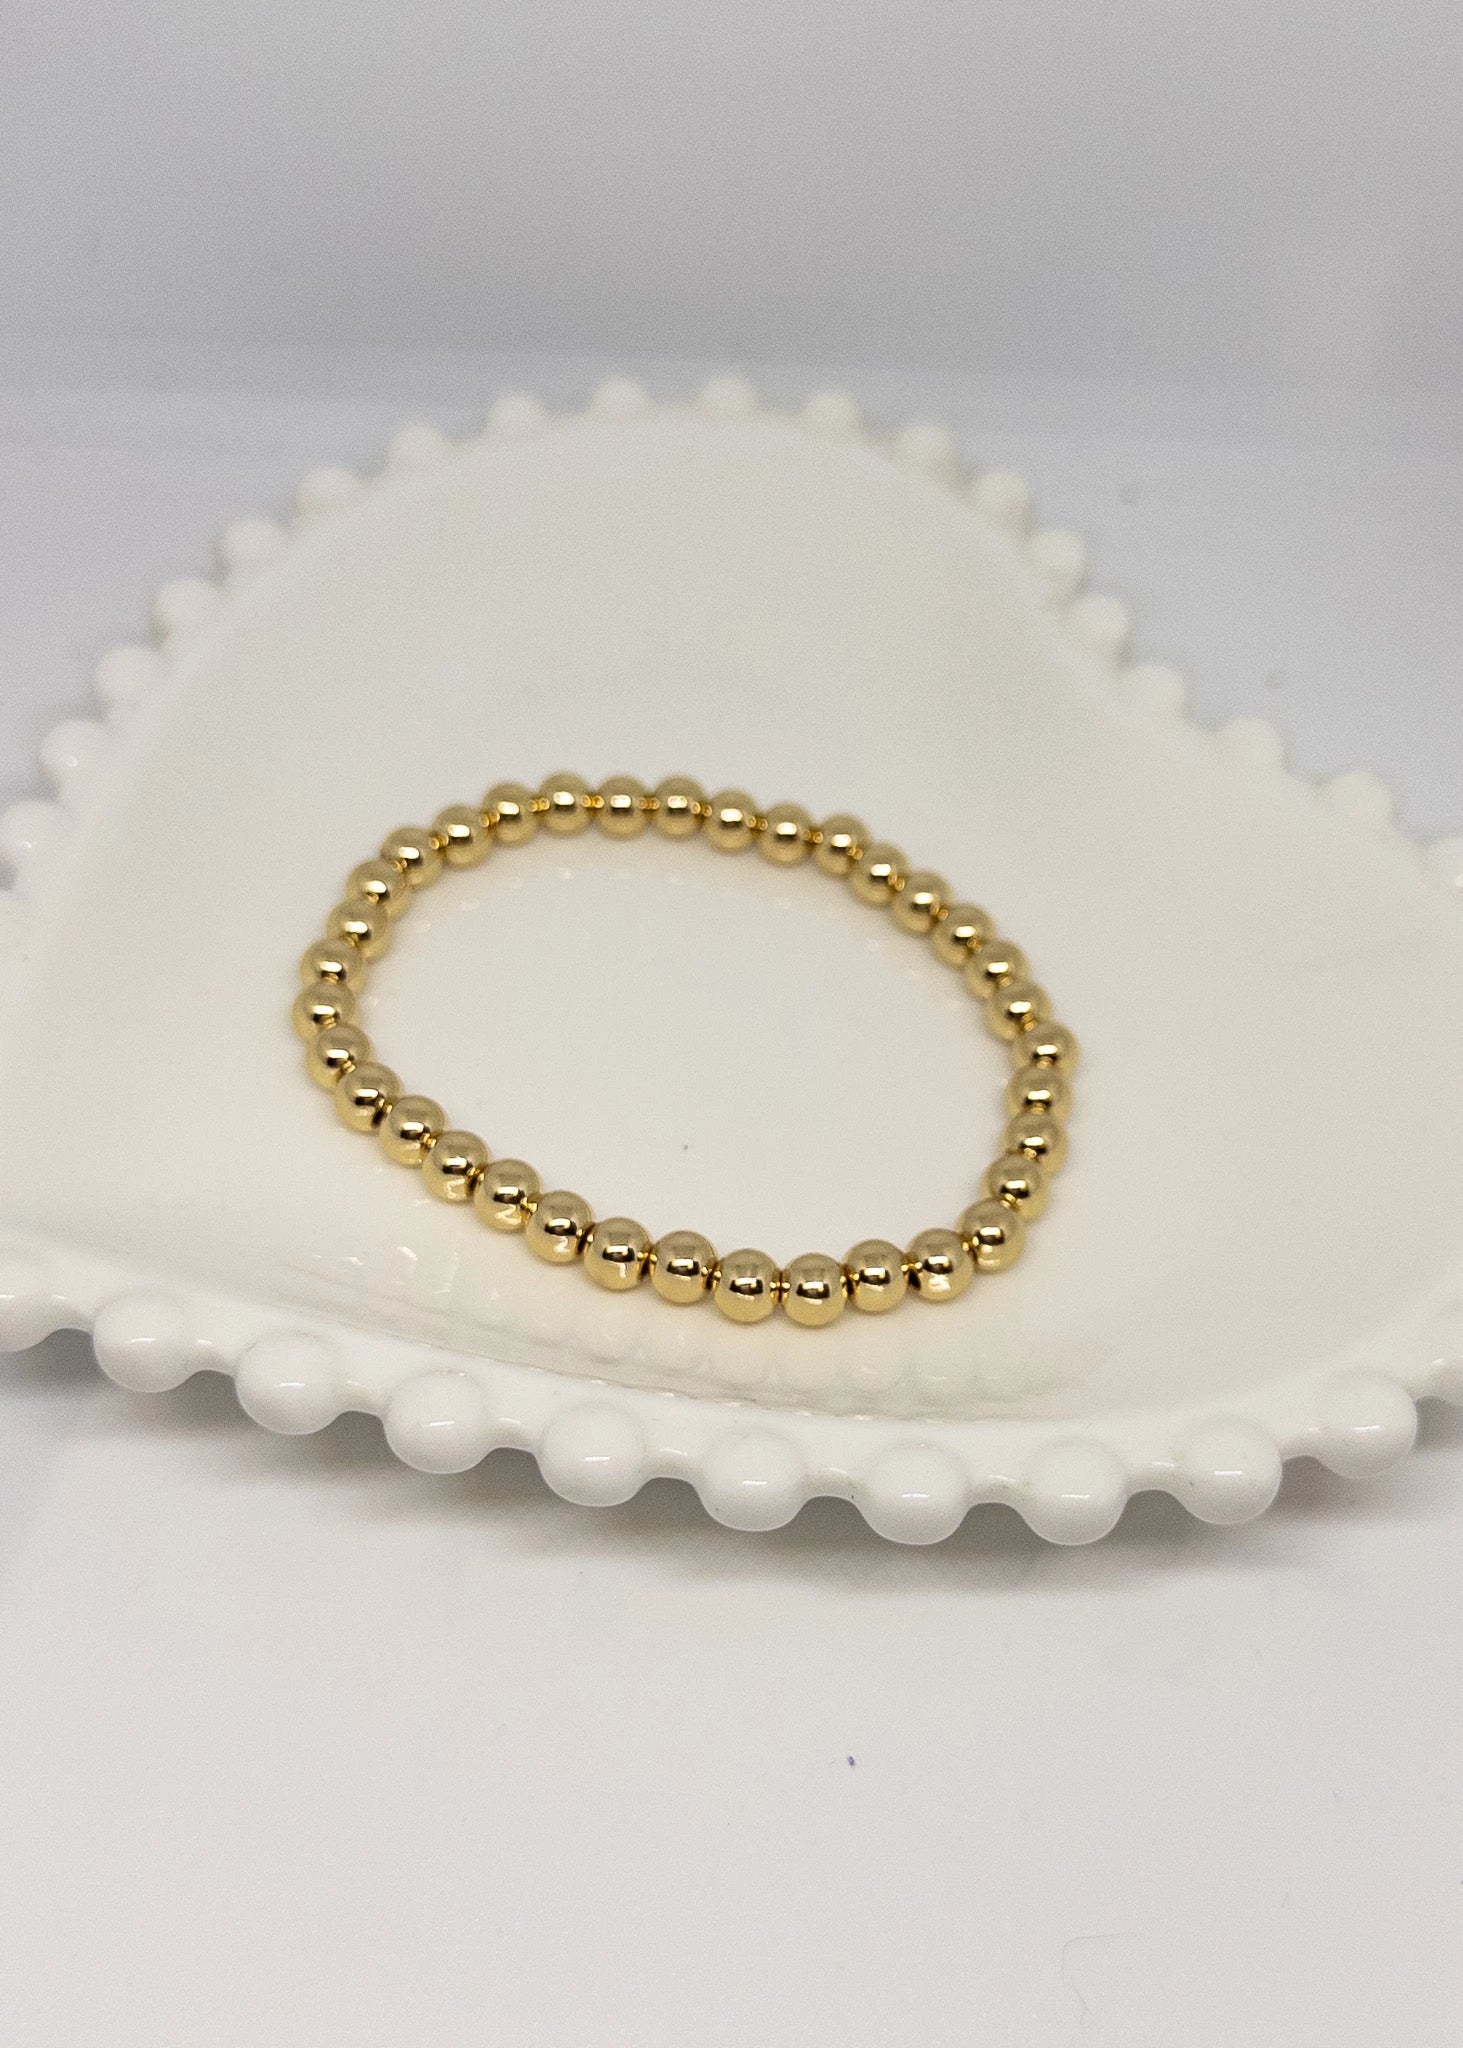 4mm Gold Beaded Stretch Bracelet